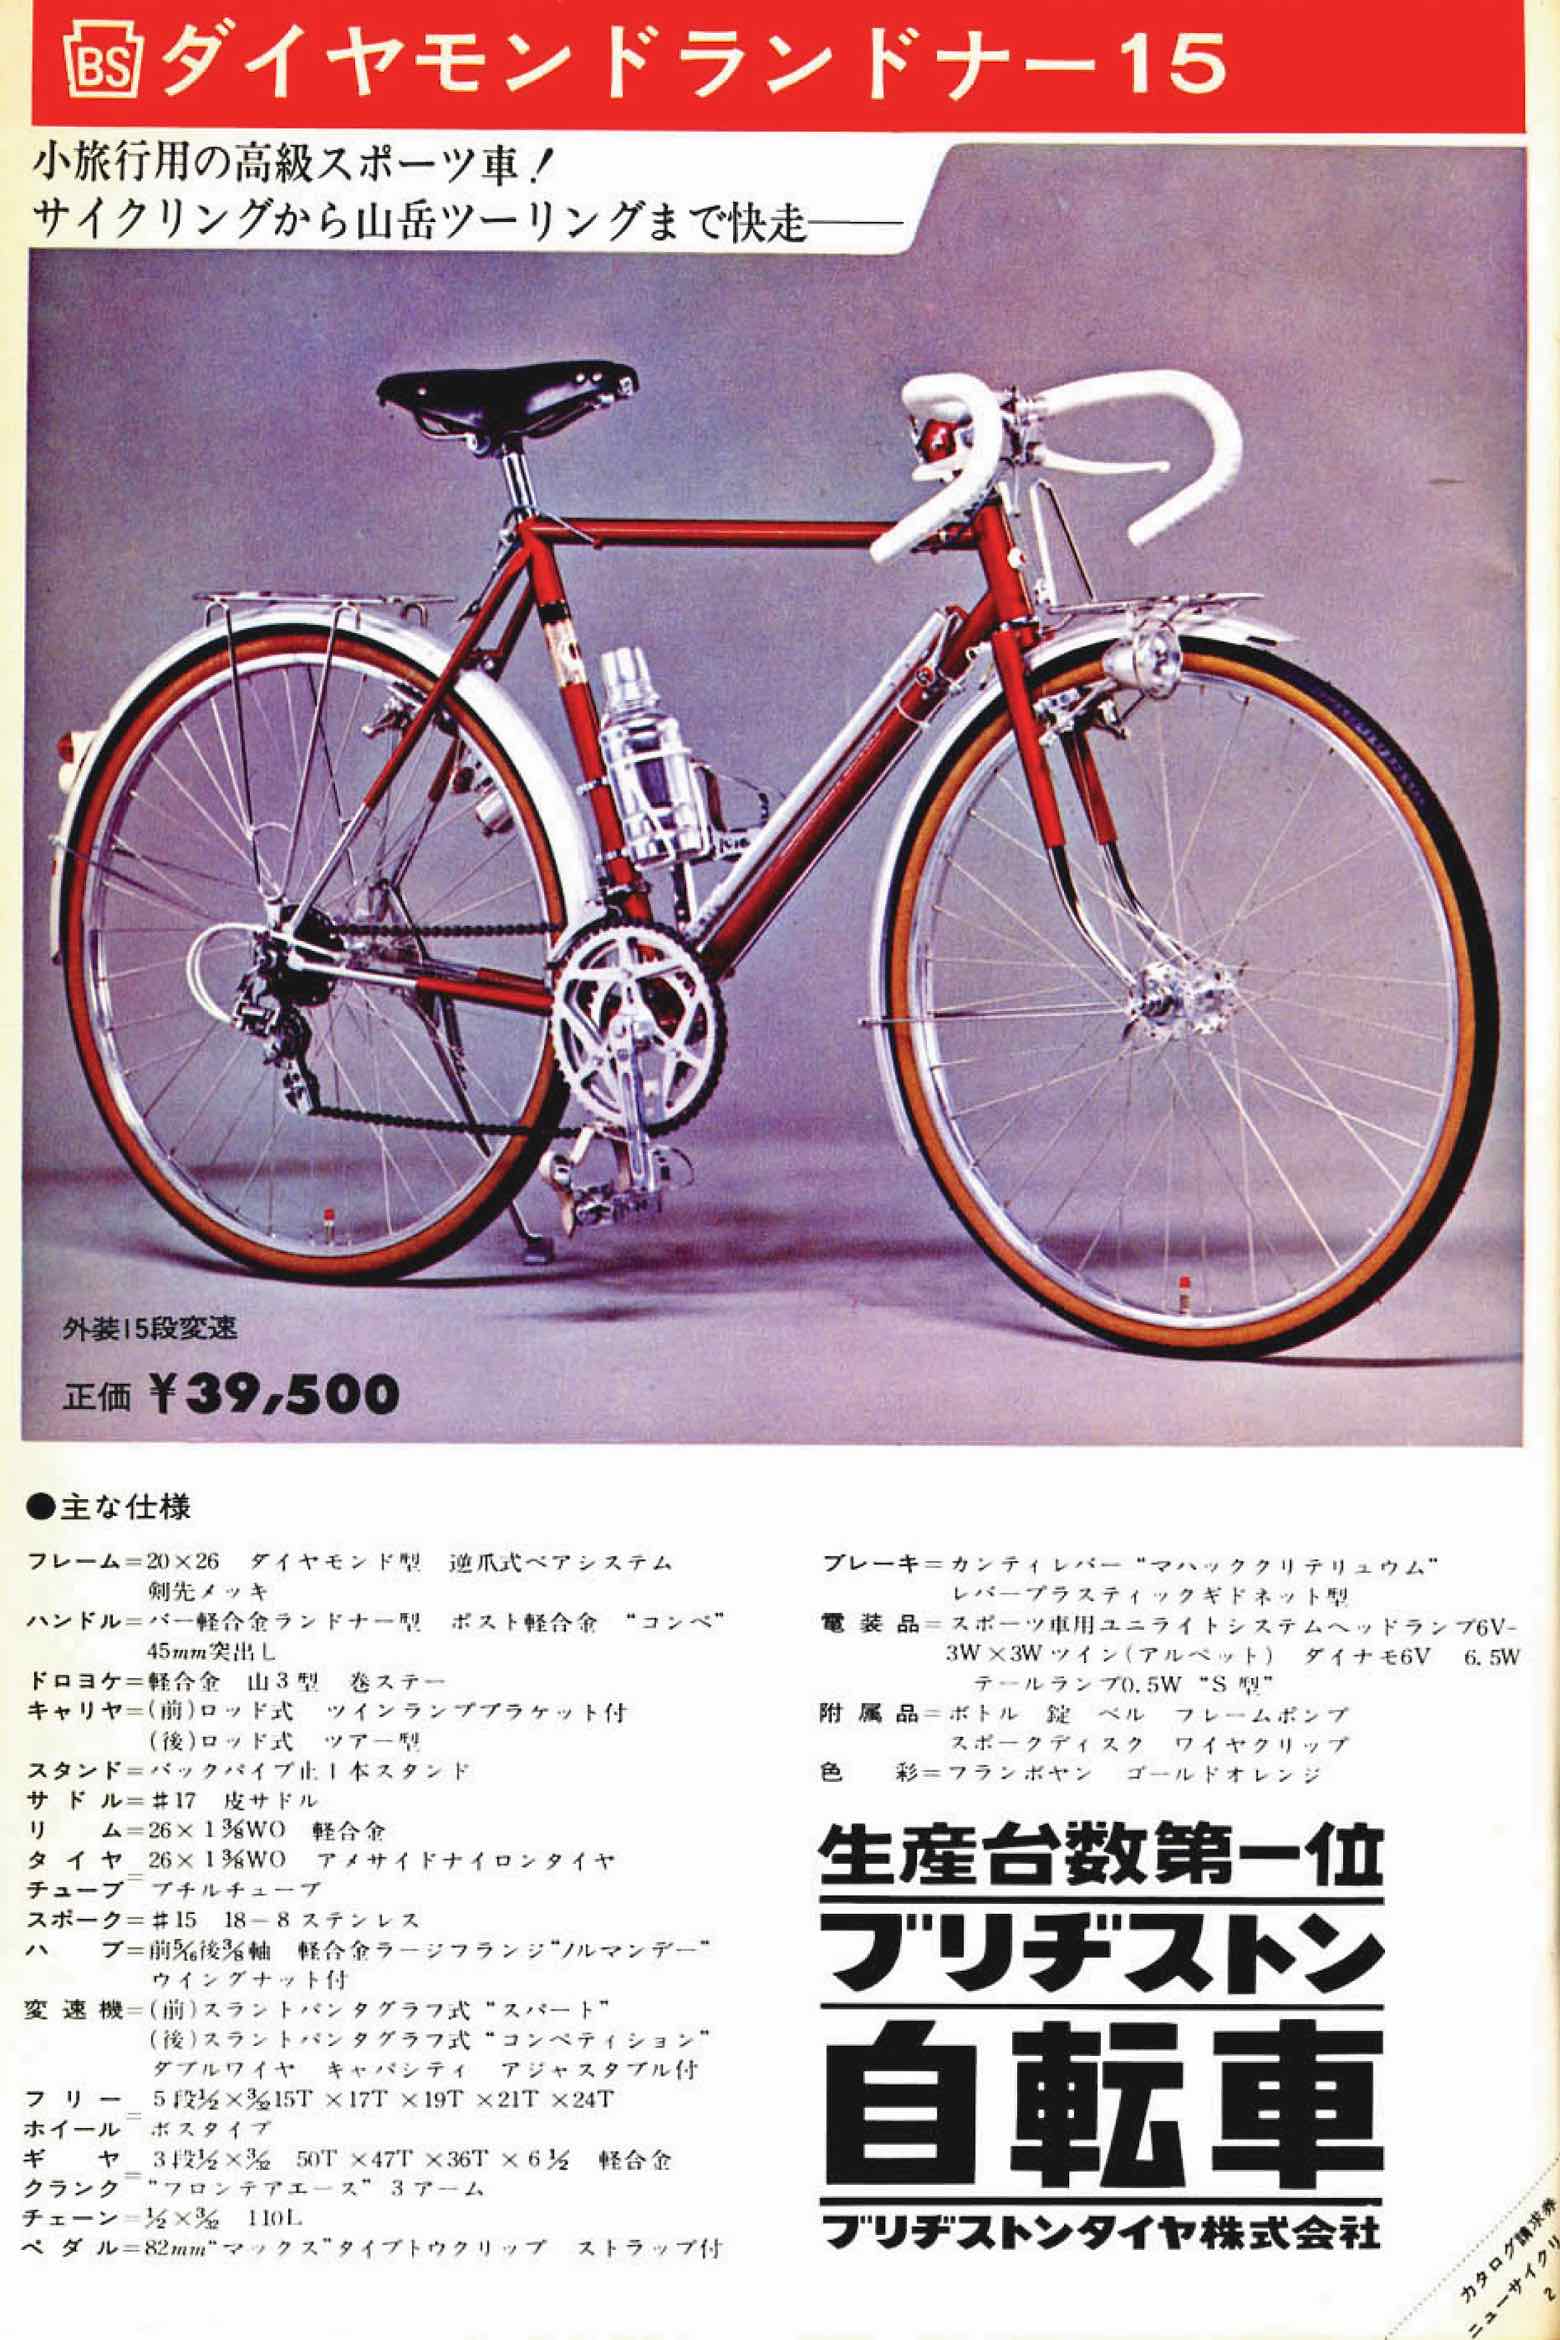 New Cycling February 1967 - Bridgestone advert main image